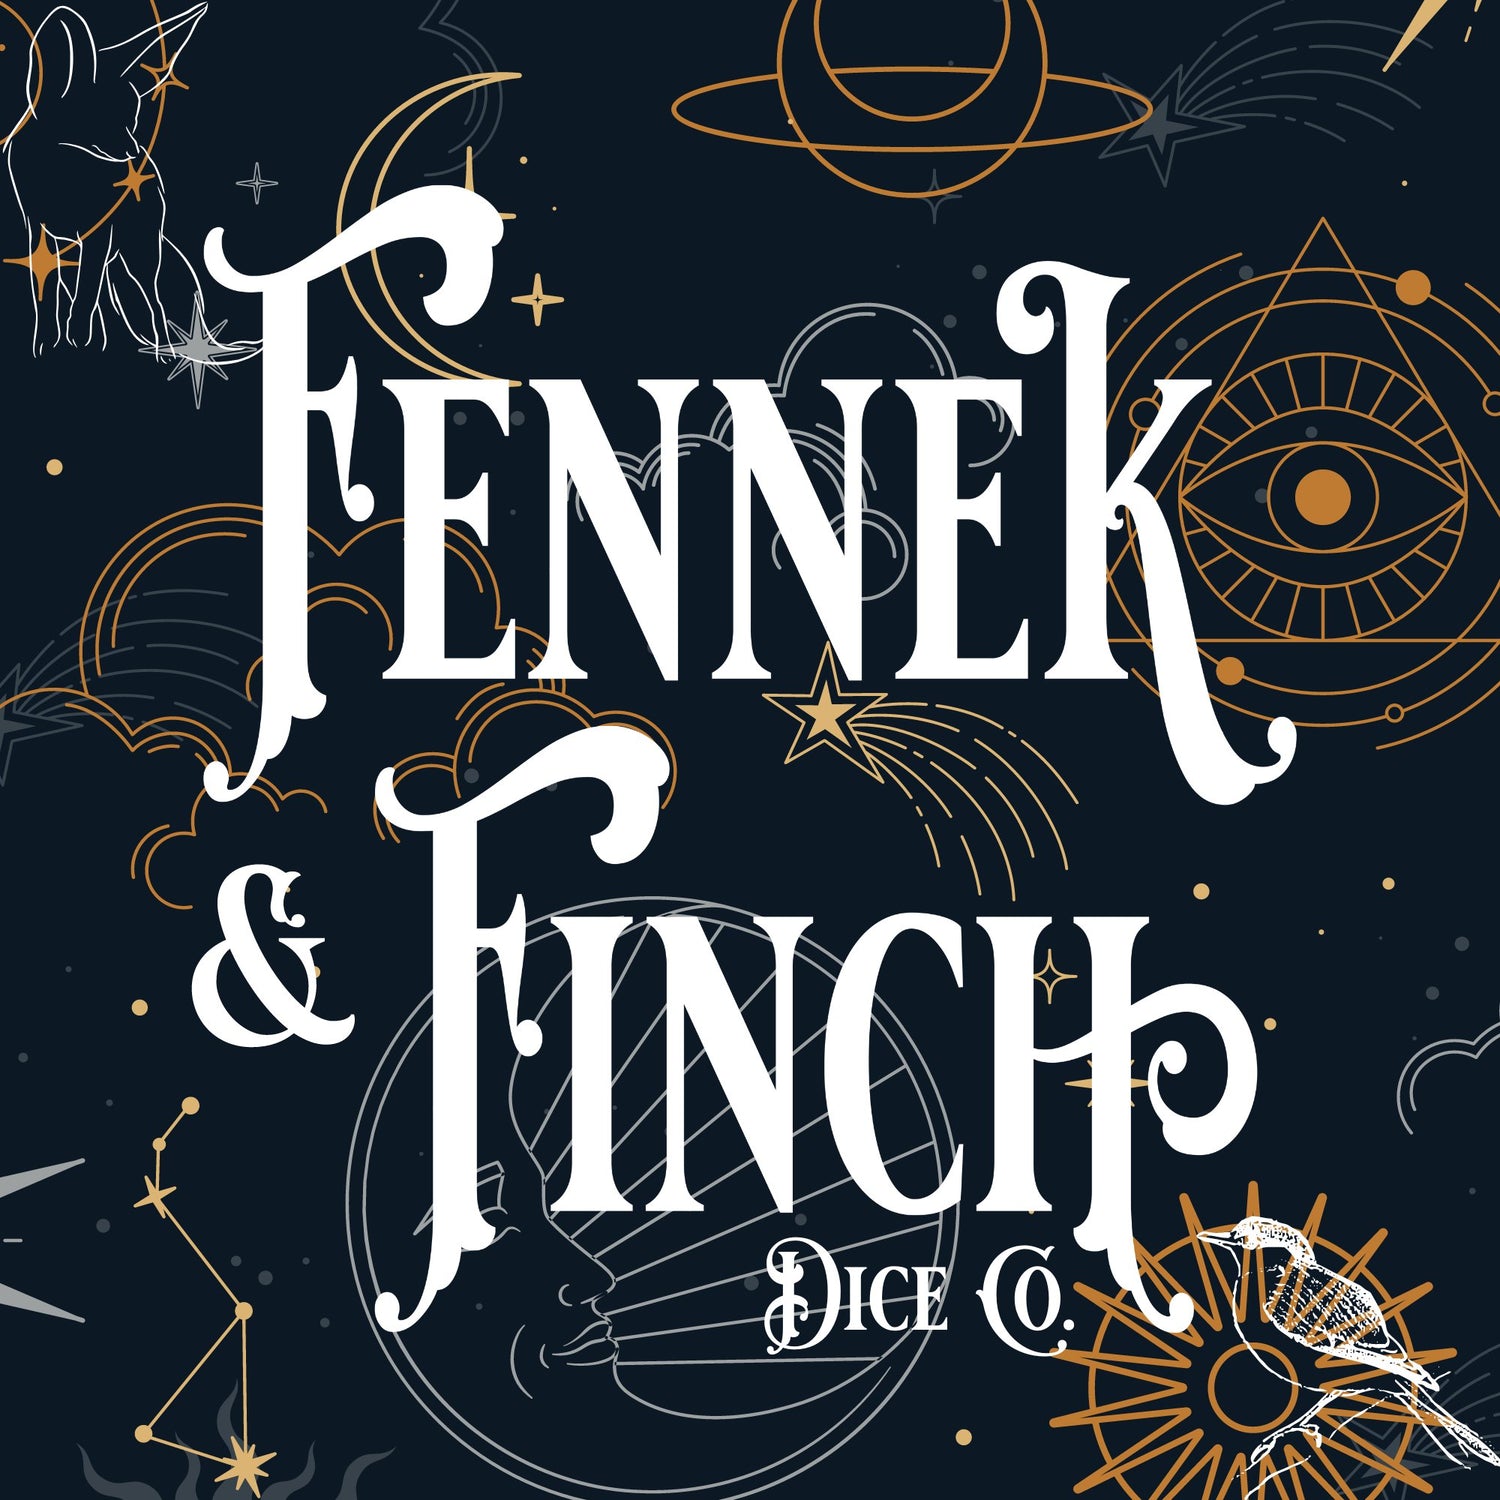 Fennek and Finch Dice Company Logo